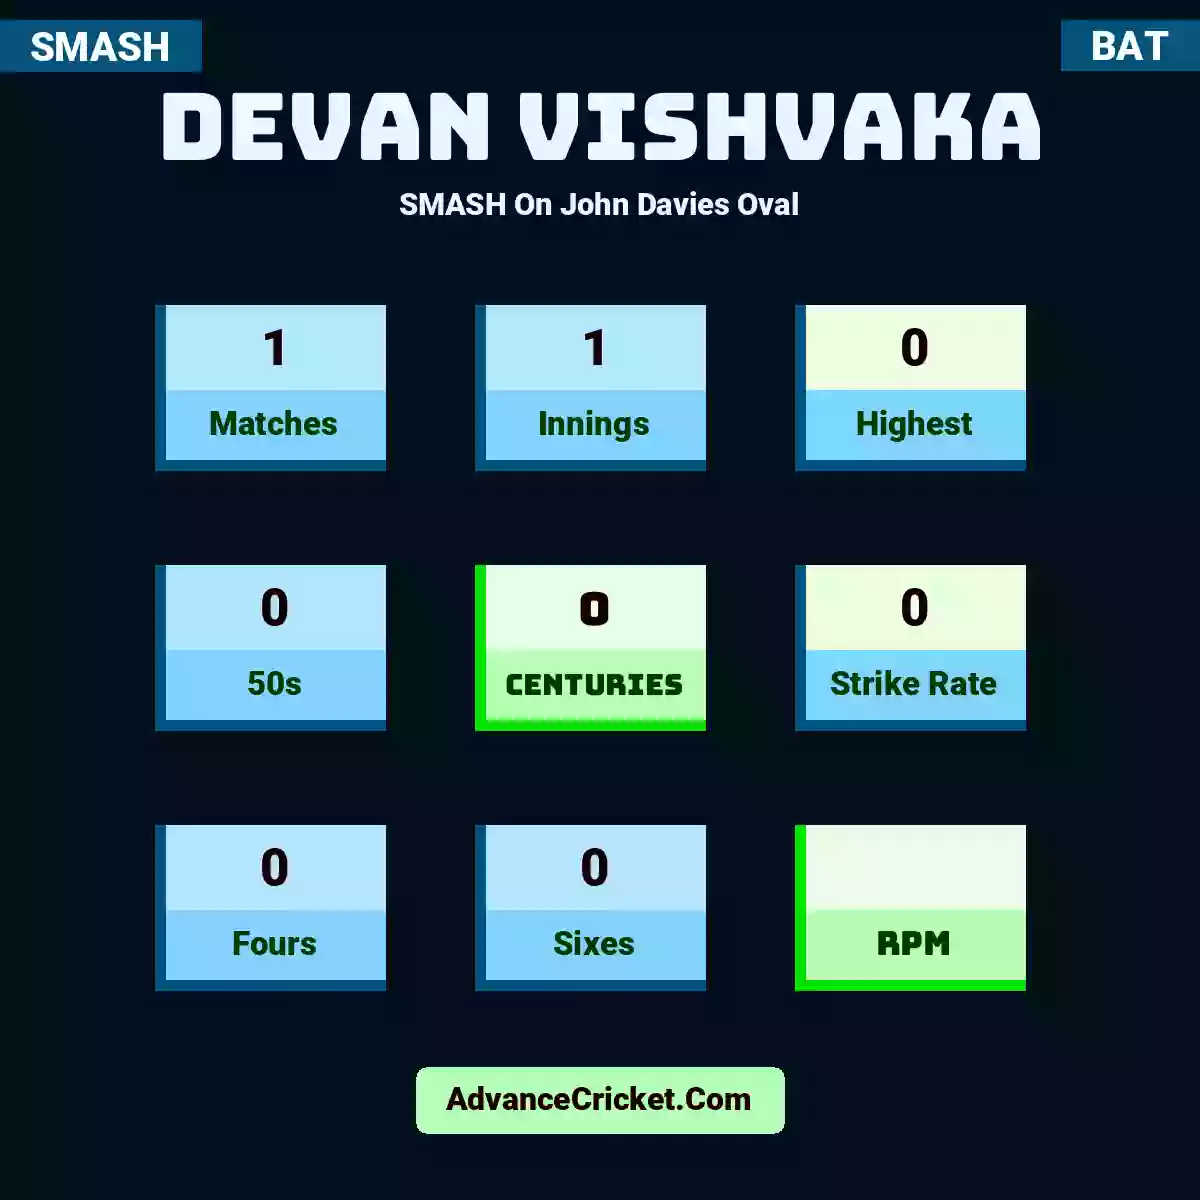 Devan Vishvaka SMASH  On John Davies Oval, Devan Vishvaka played 1 matches, scored 0 runs as highest, 0 half-centuries, and 0 centuries, with a strike rate of 0. D.Vishvaka hit 0 fours and 0 sixes.